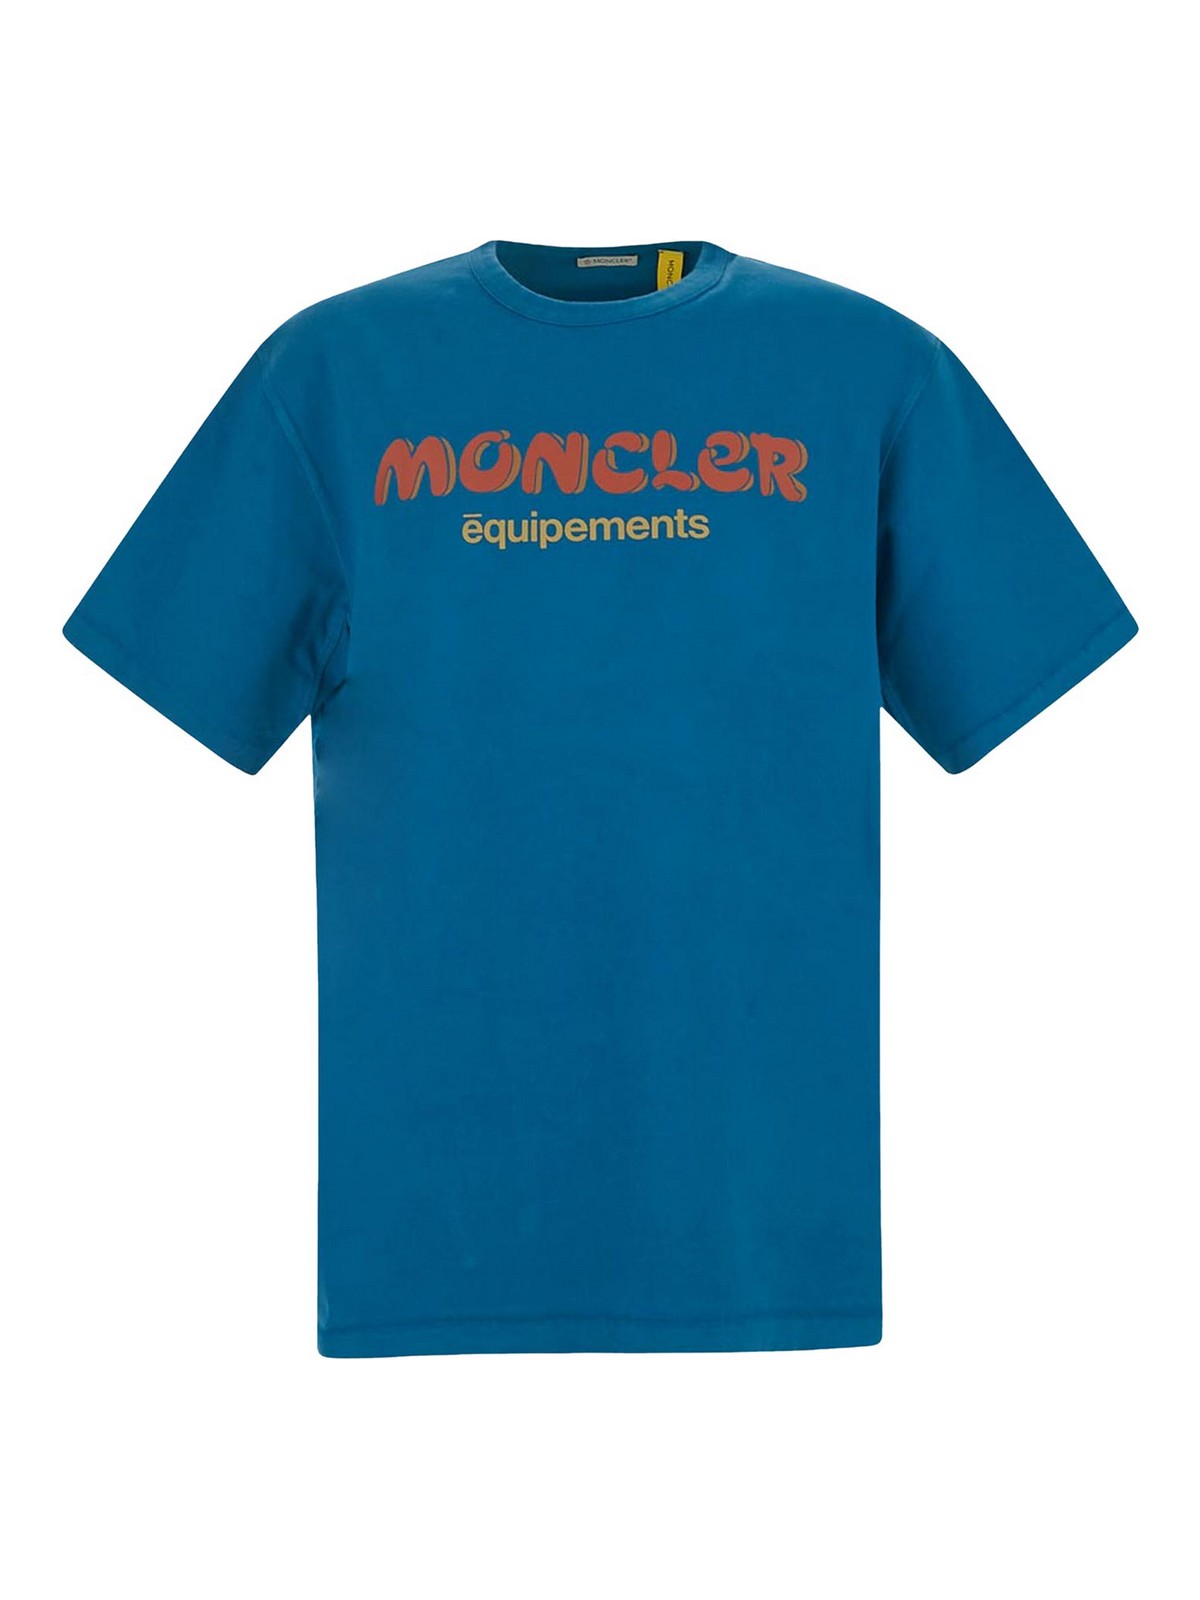 Moncler X Salehe Bembury T-shirt S In Light Blue